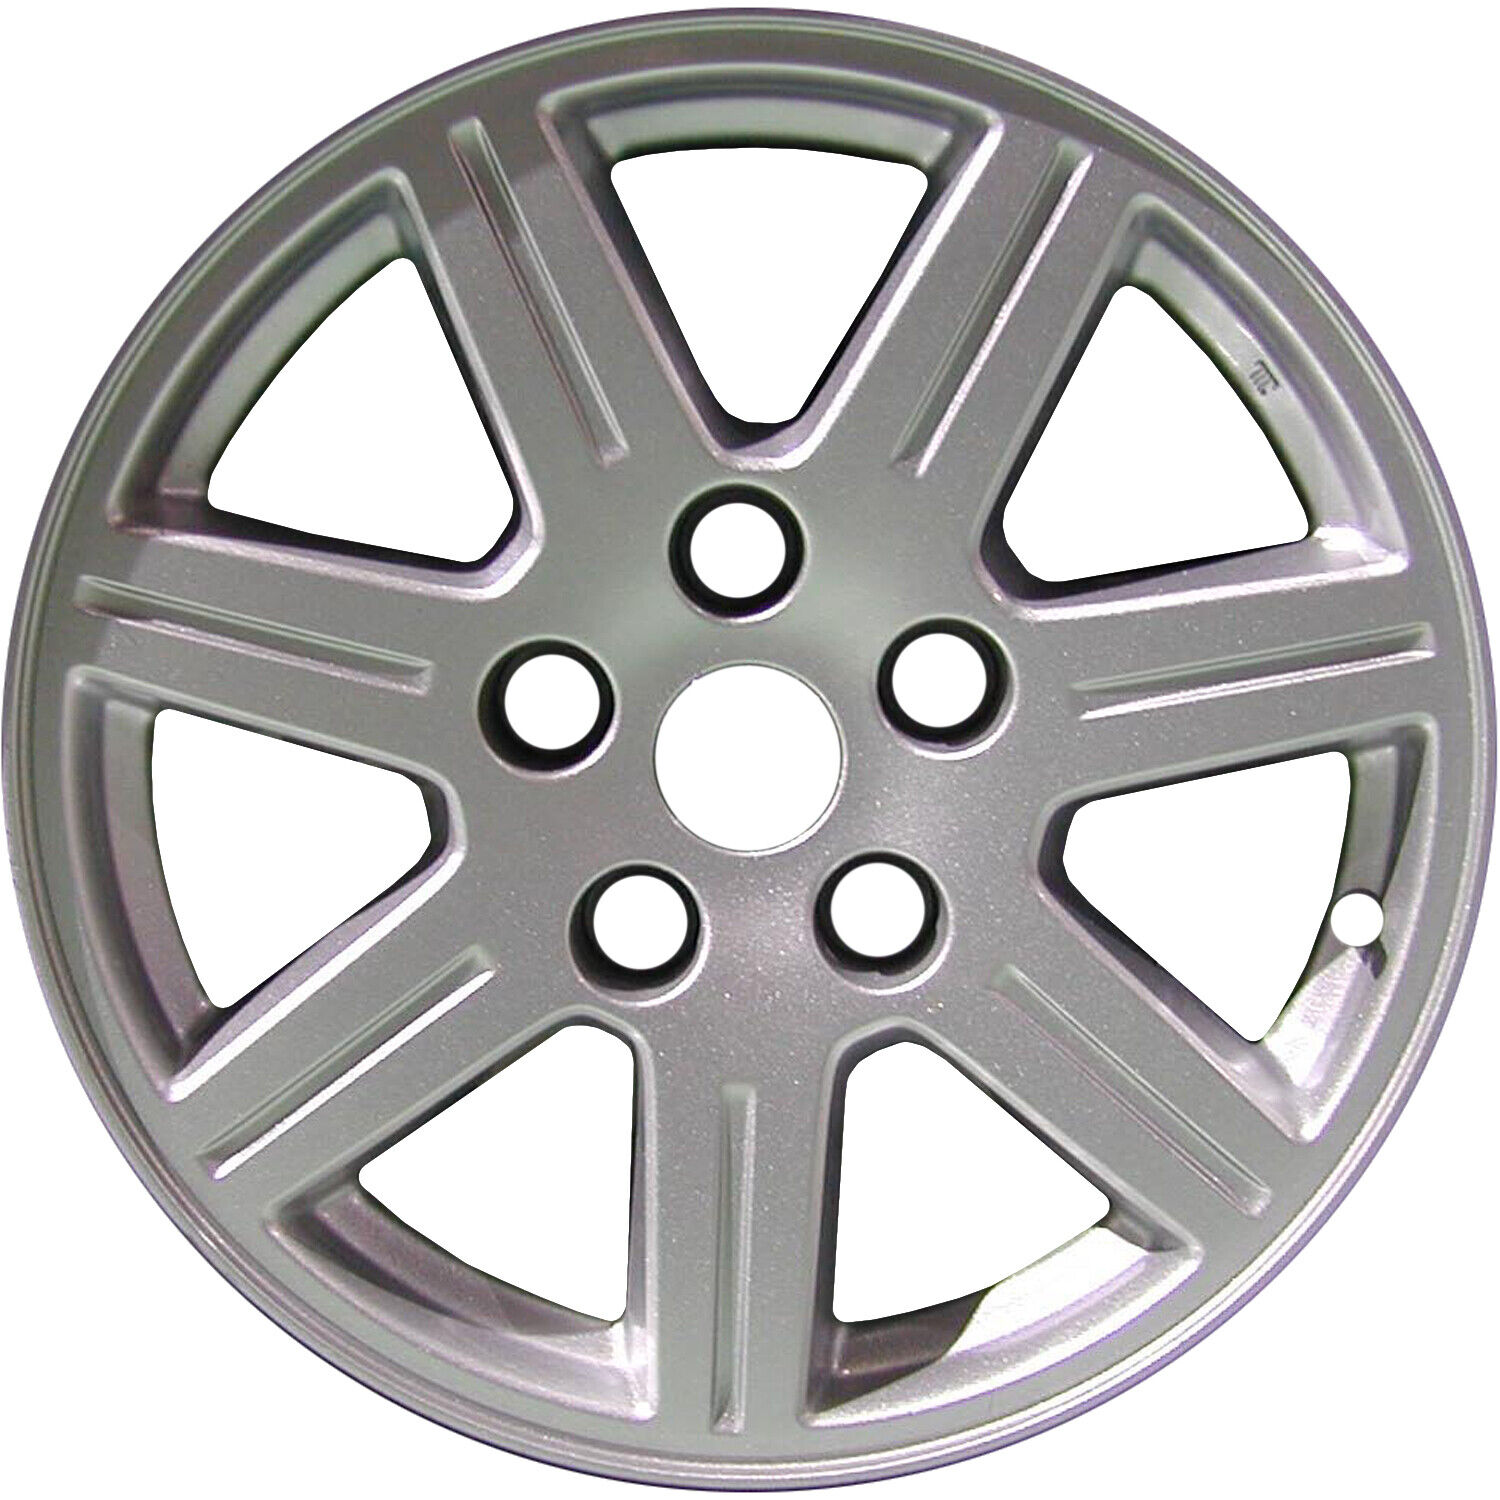 02293 Reconditioned OEM Aluminum Wheel 18x8 fits 2007-2009 Chrysler Aspen